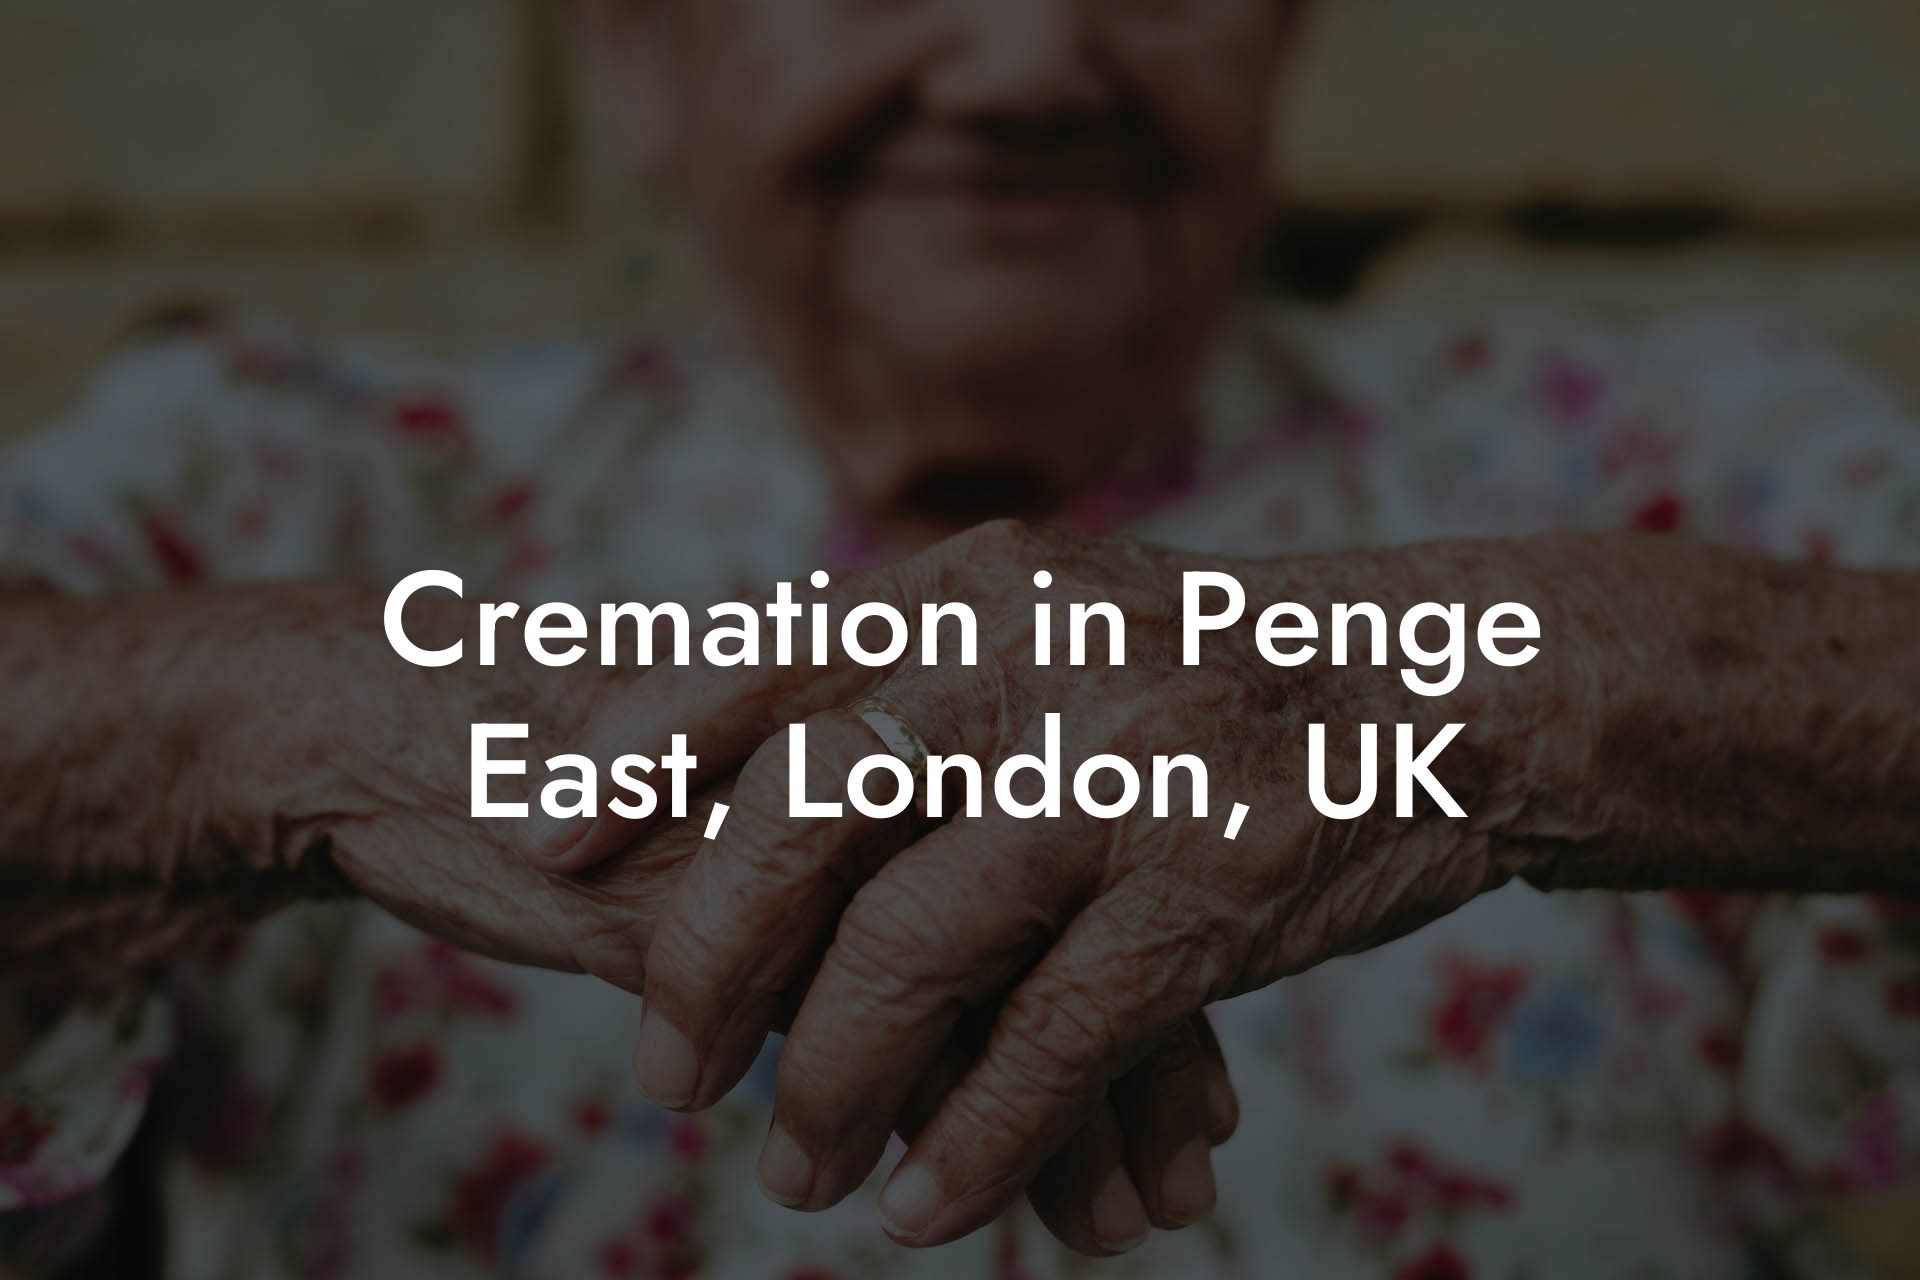 Cremation in Penge East, London, UK